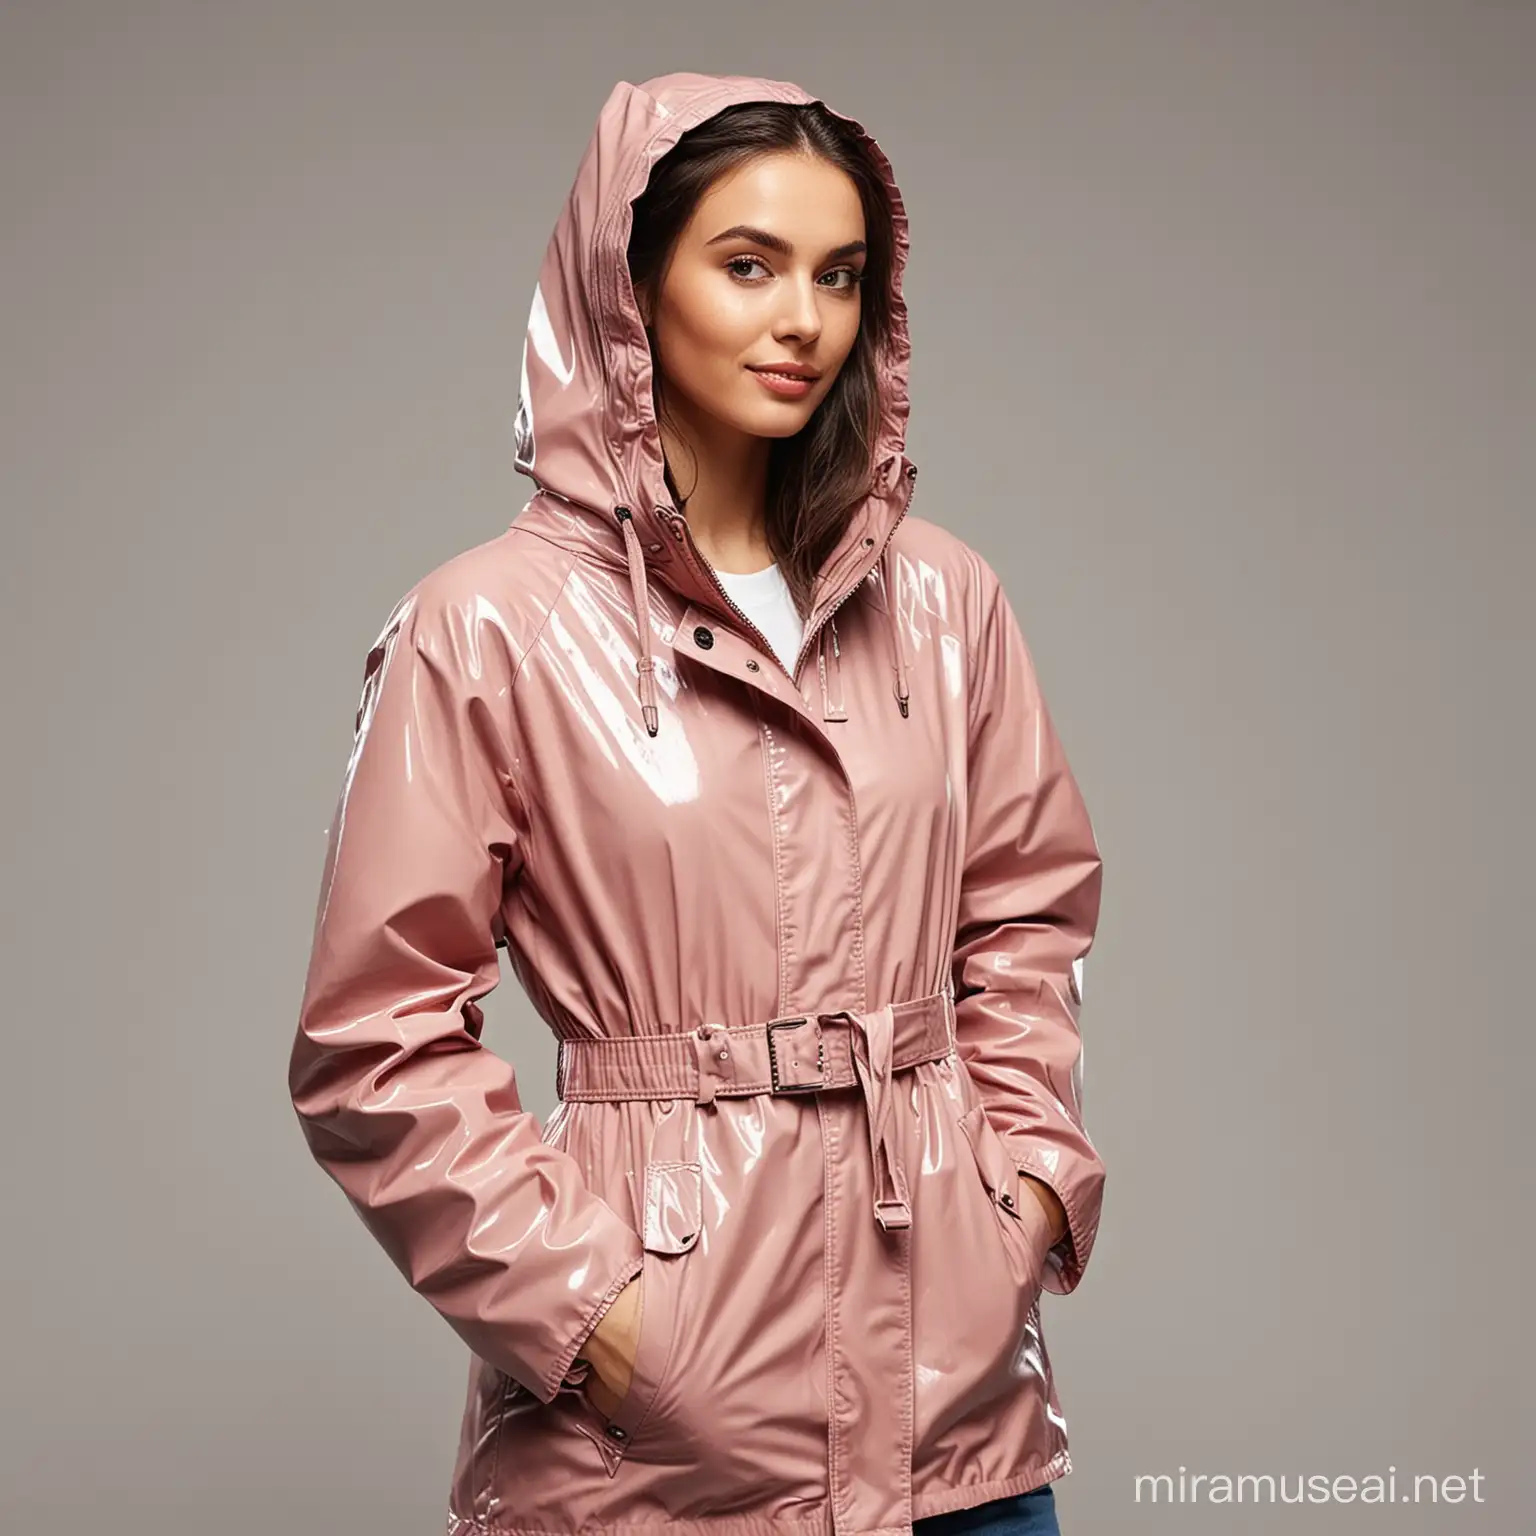 Fashionable Woman Wearing a Stylish Rain Jacket in Urban Setting